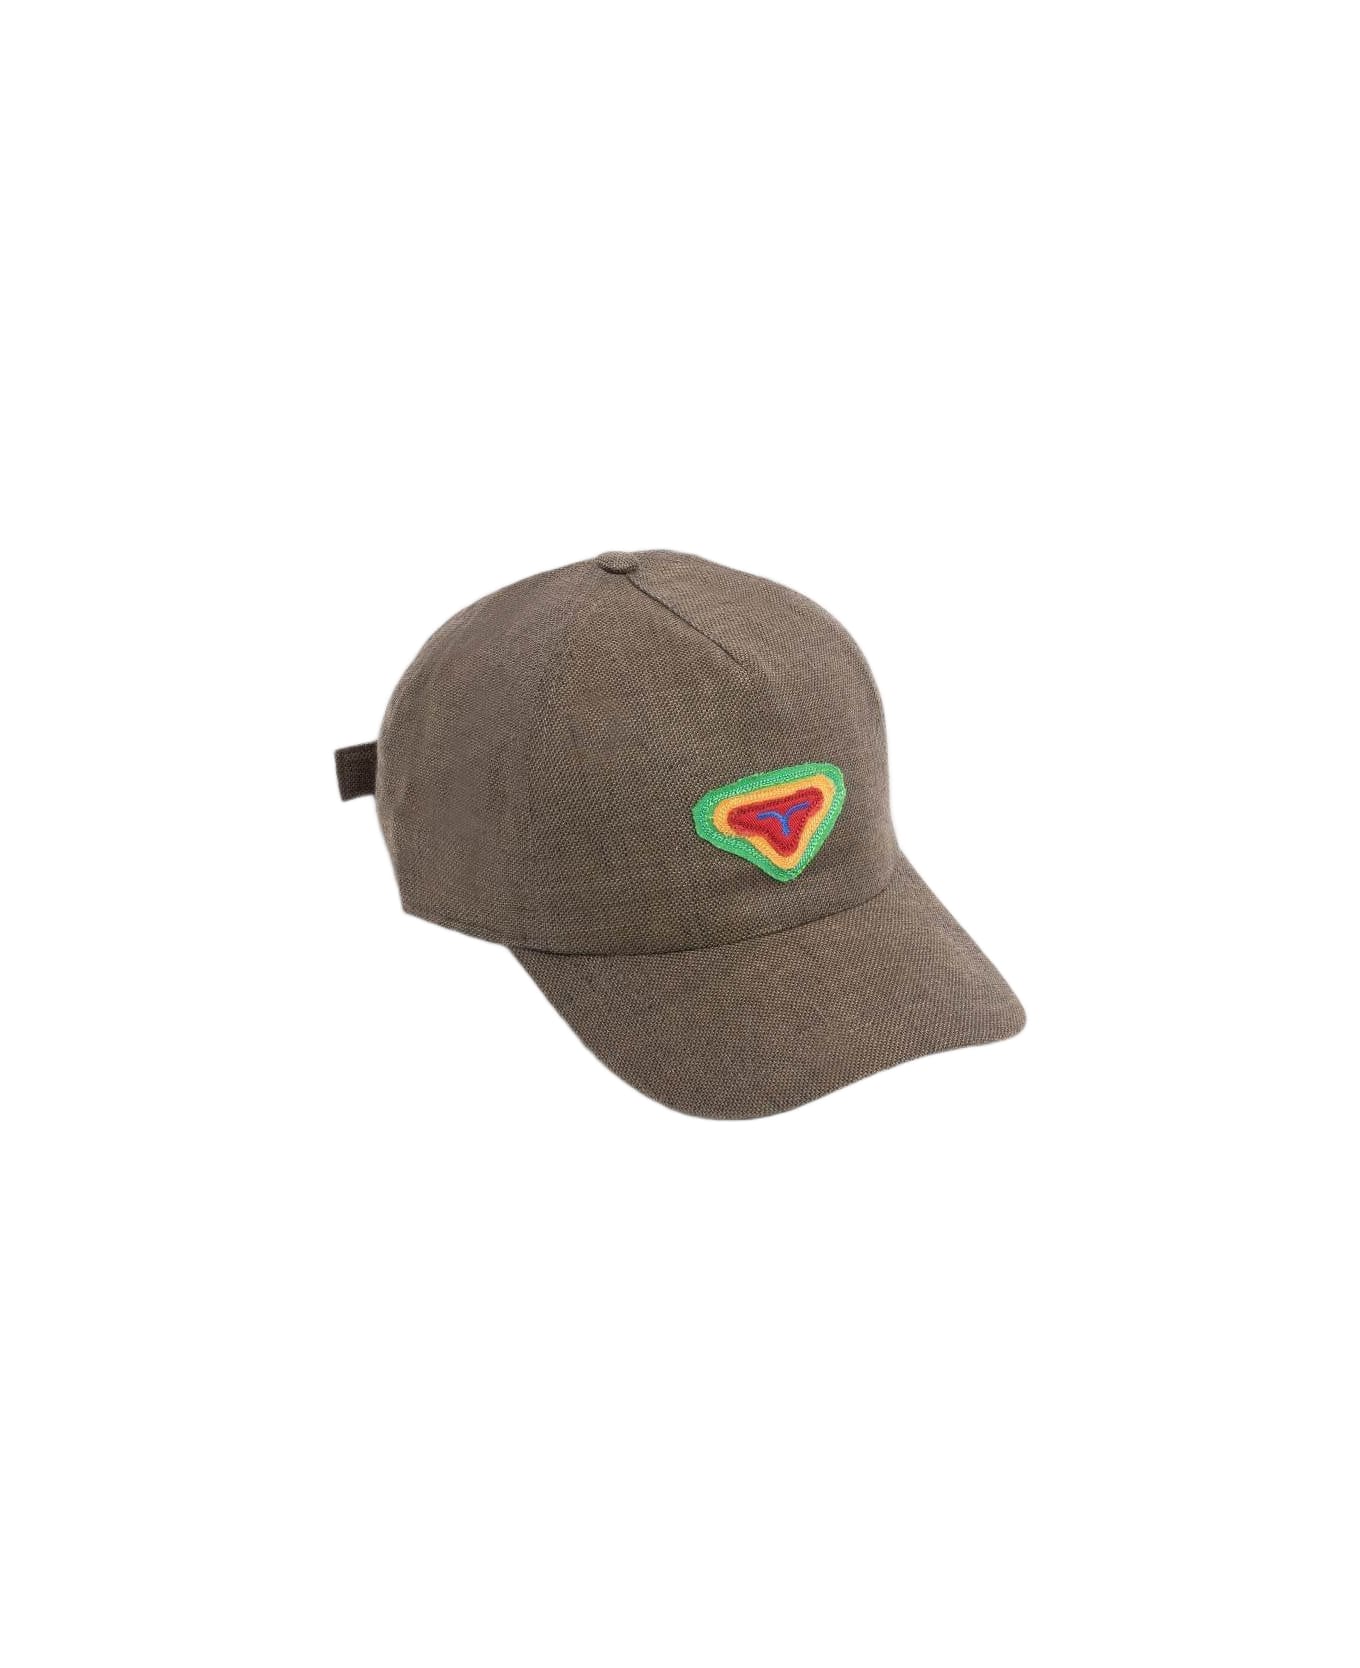 Larusmiani Baseball Cap Hat - Olive